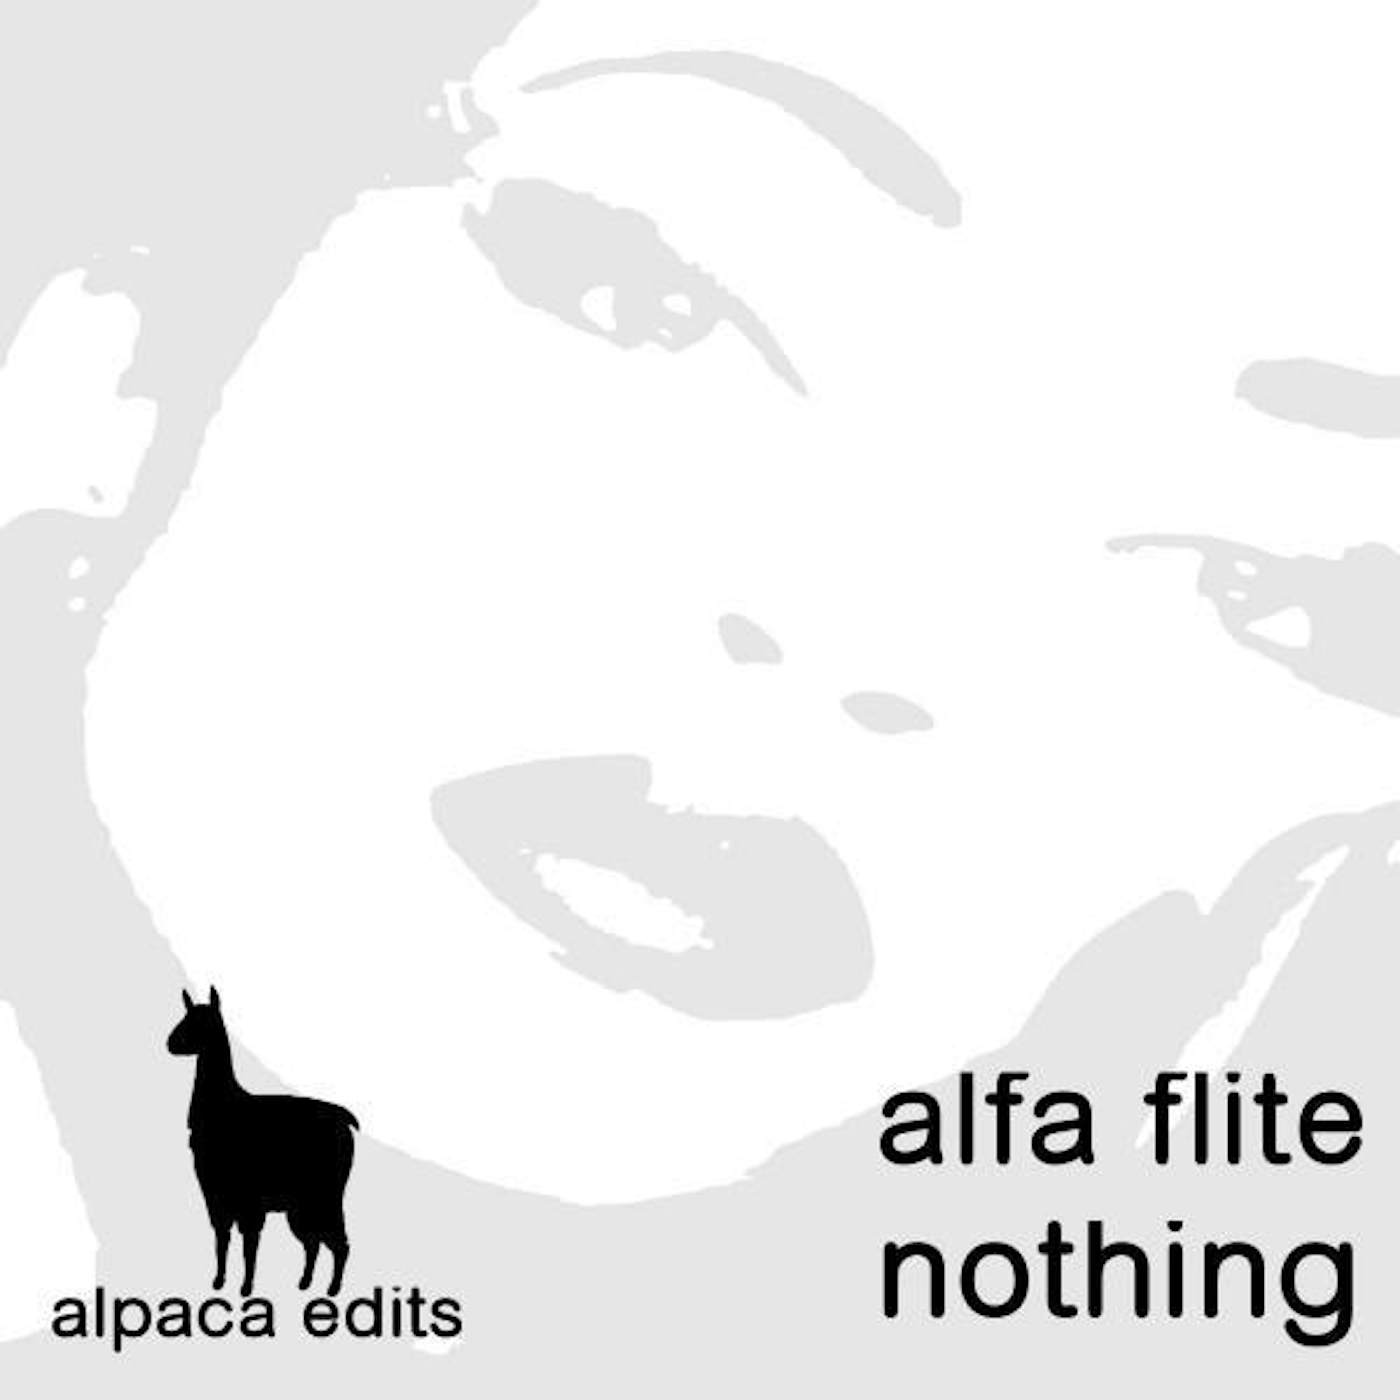 Alfa Flite